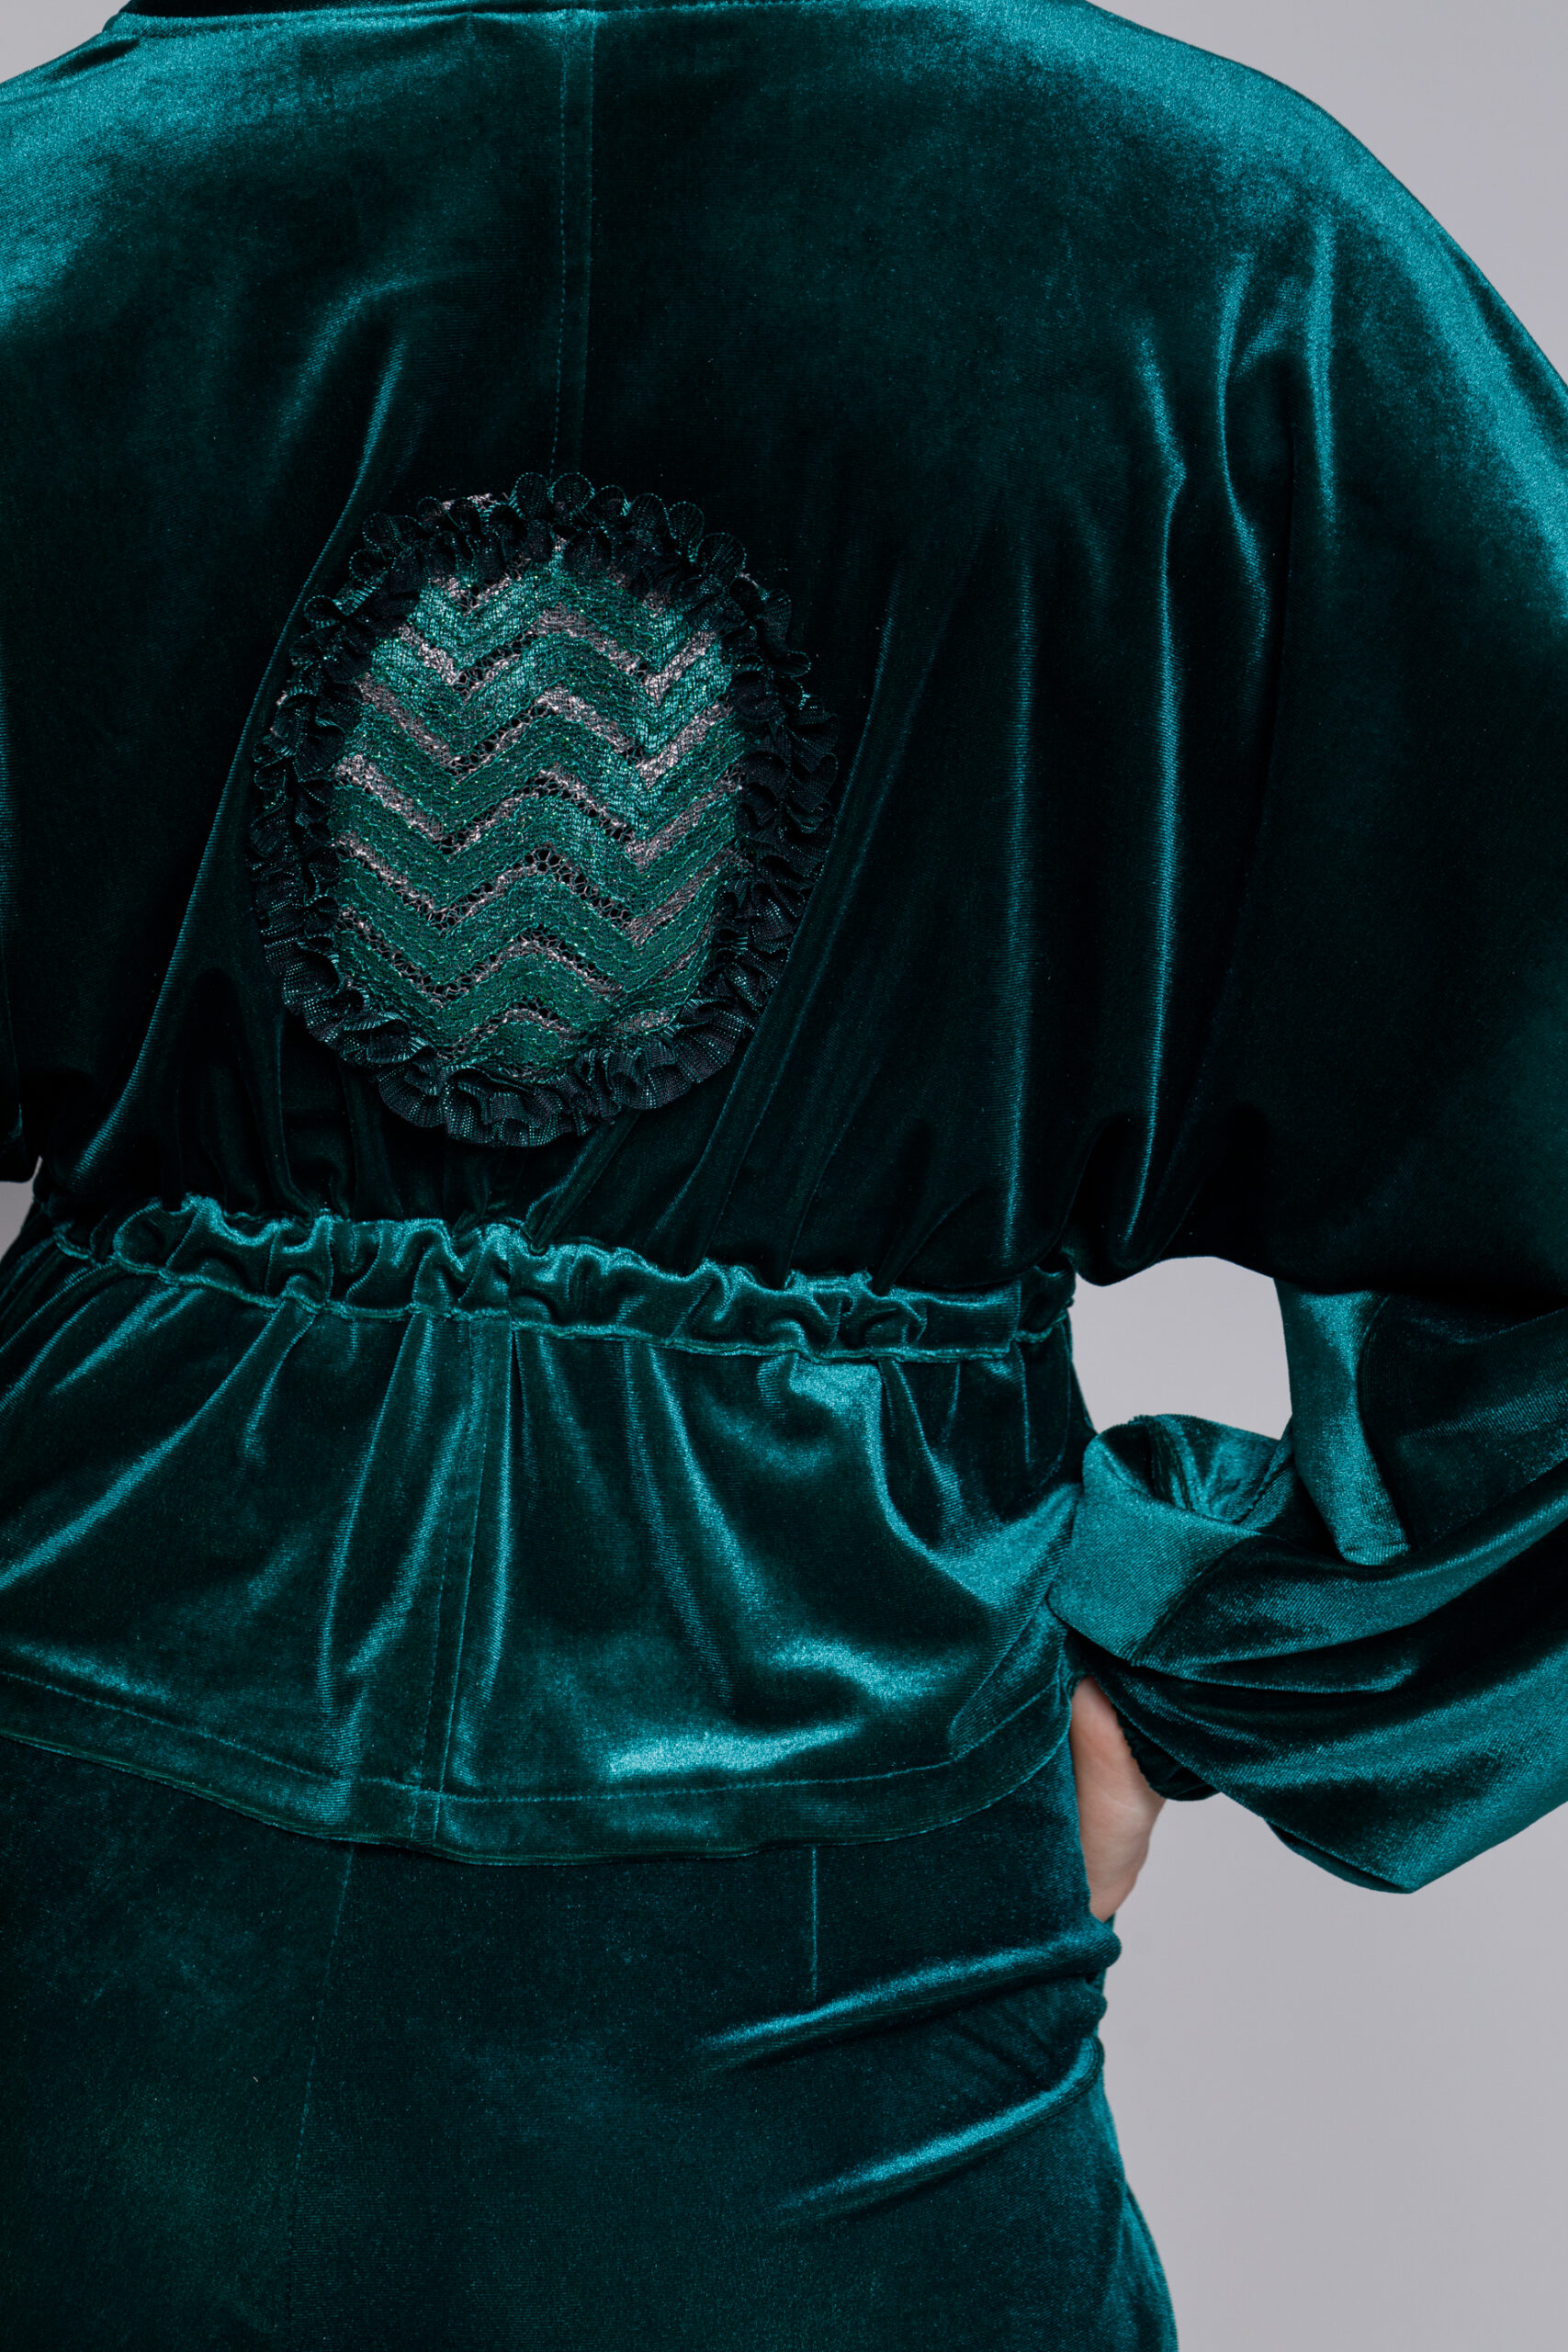 Hanorac MALIA din catifea verde smarald. Materiale naturale, design unicat, cu broderie si aplicatii handmade